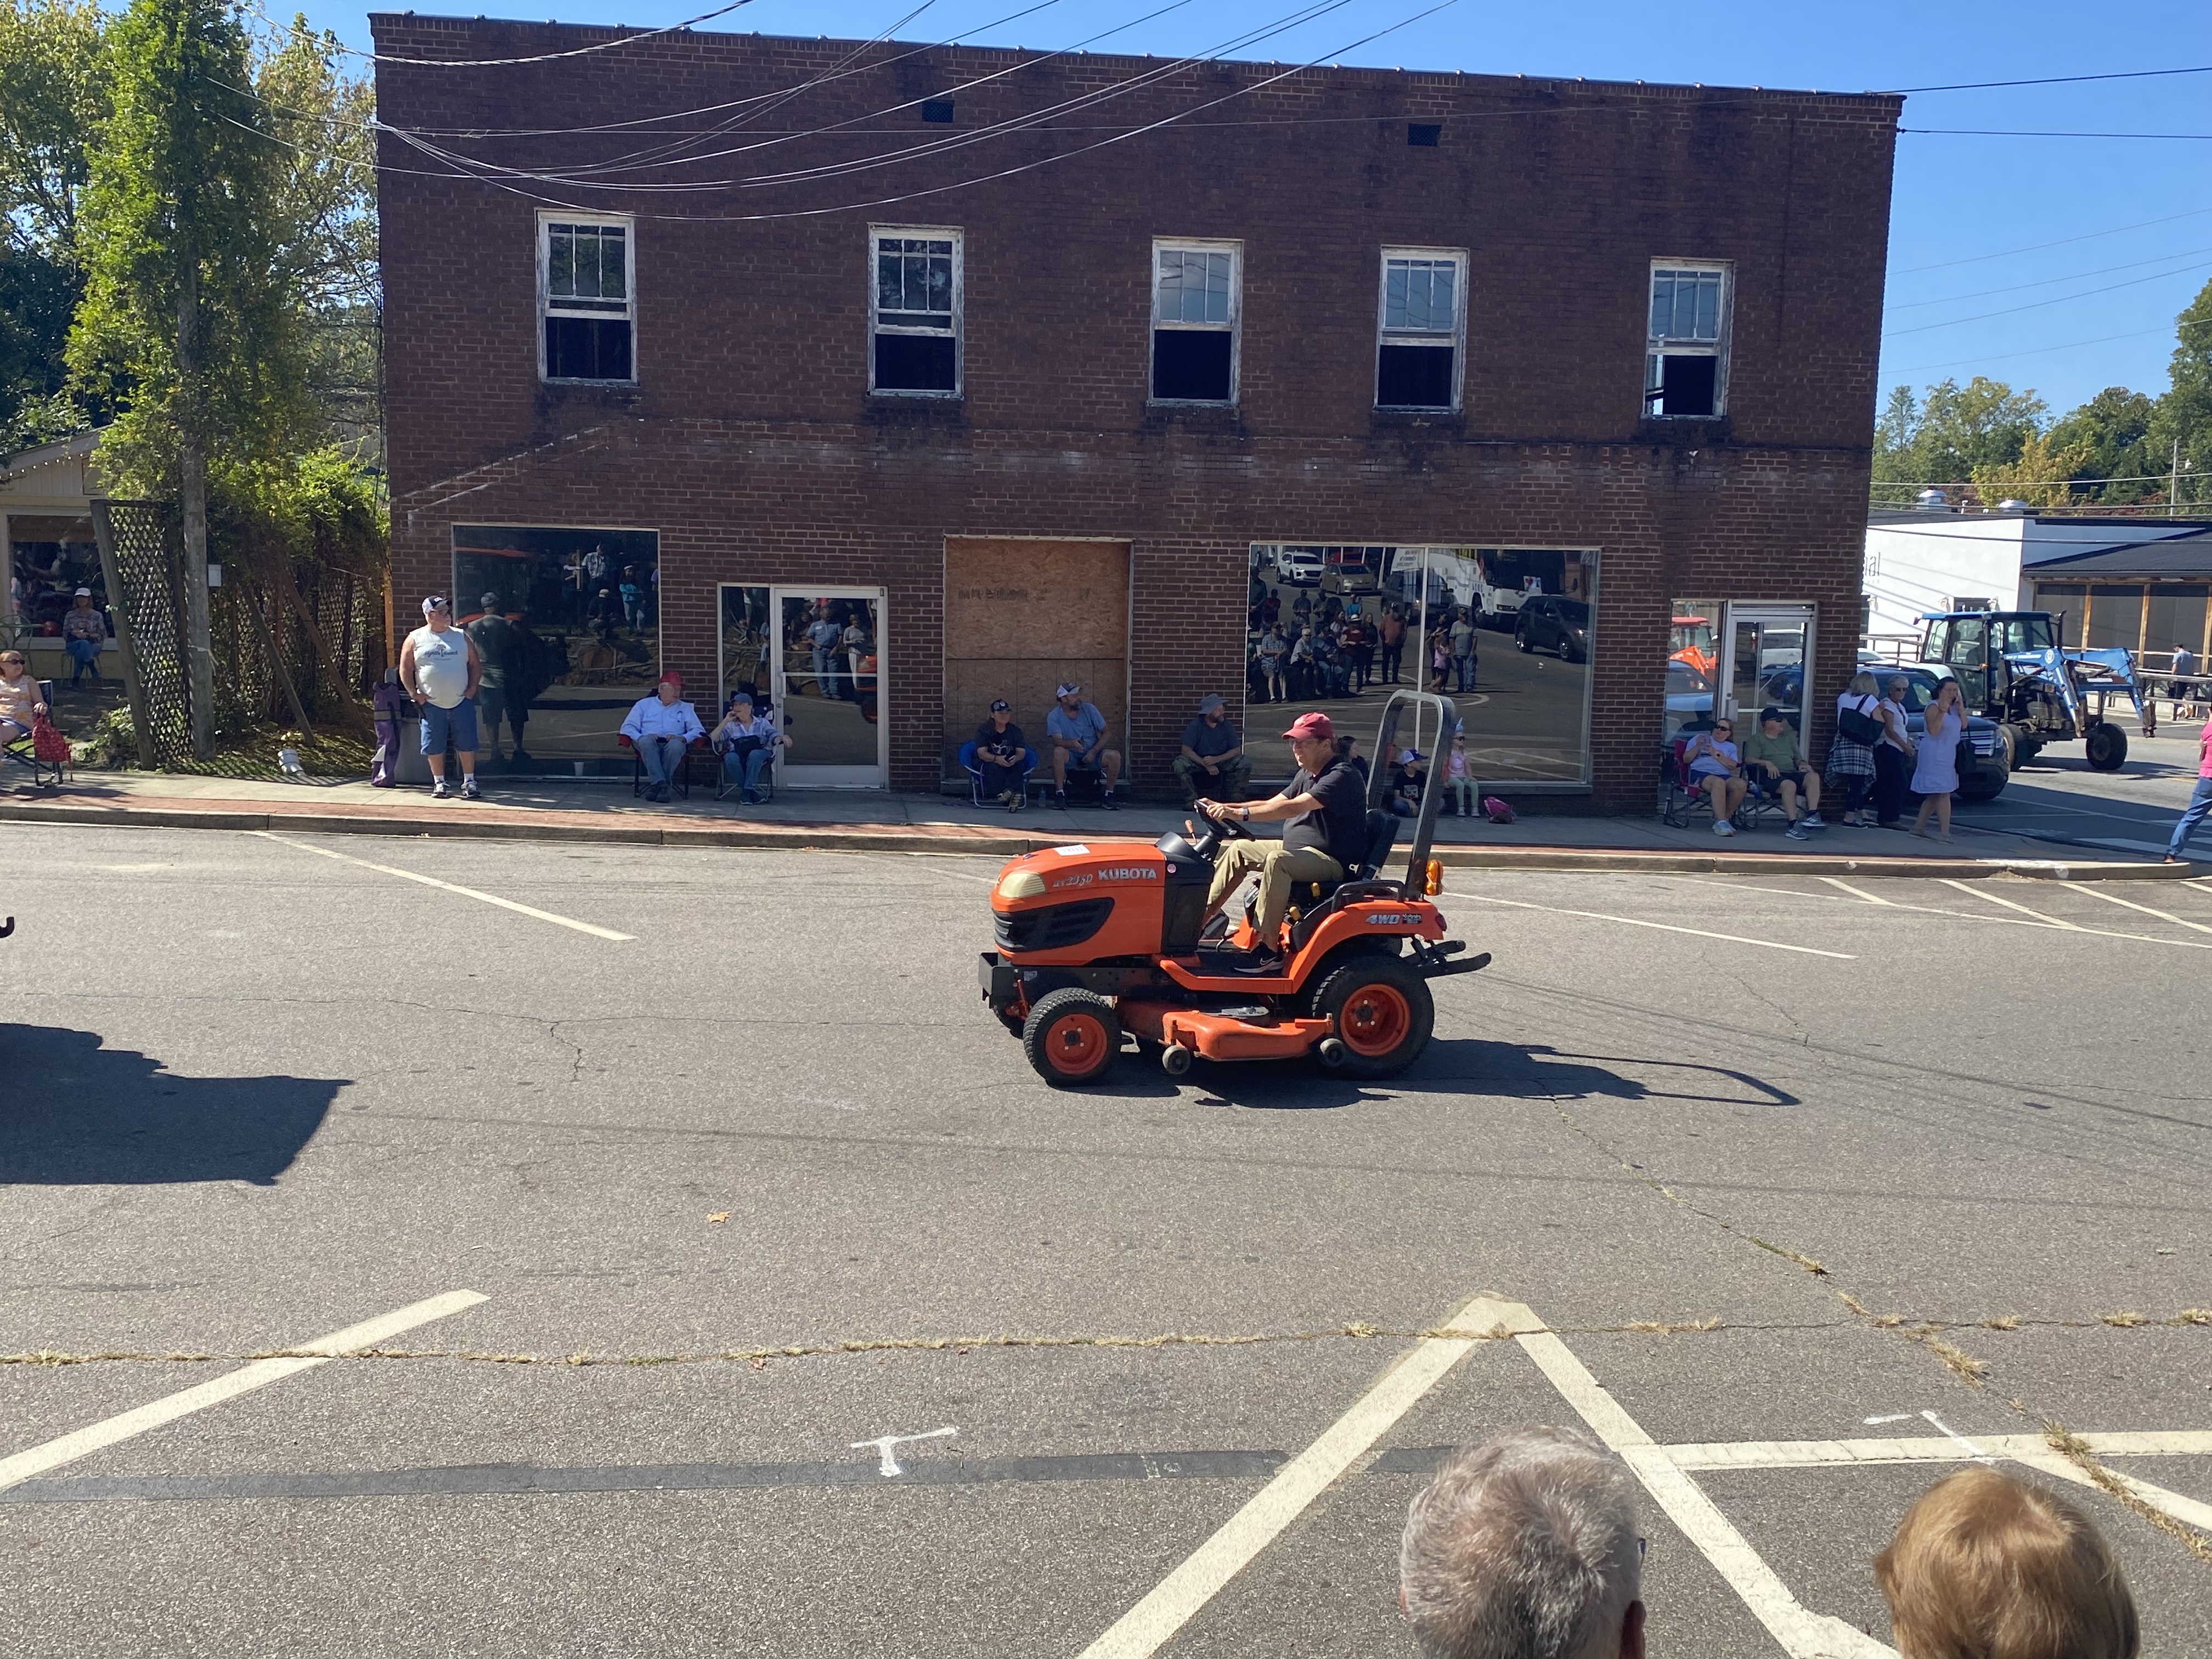 Small orange tractor in parade